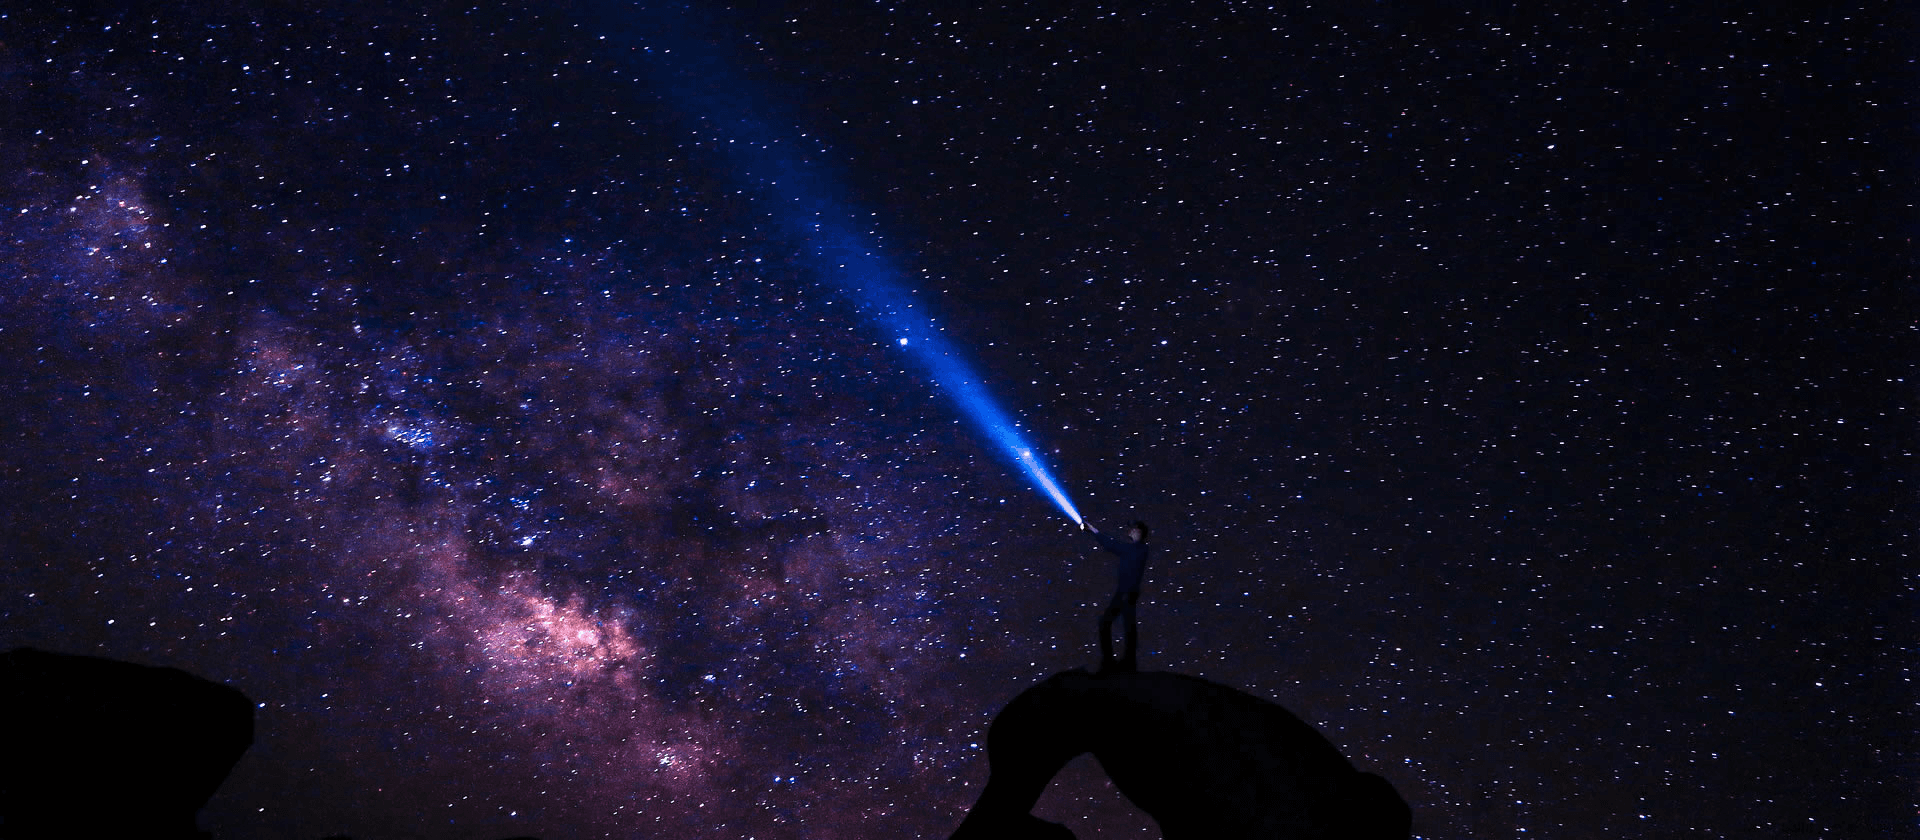 Sky full of stars during the night